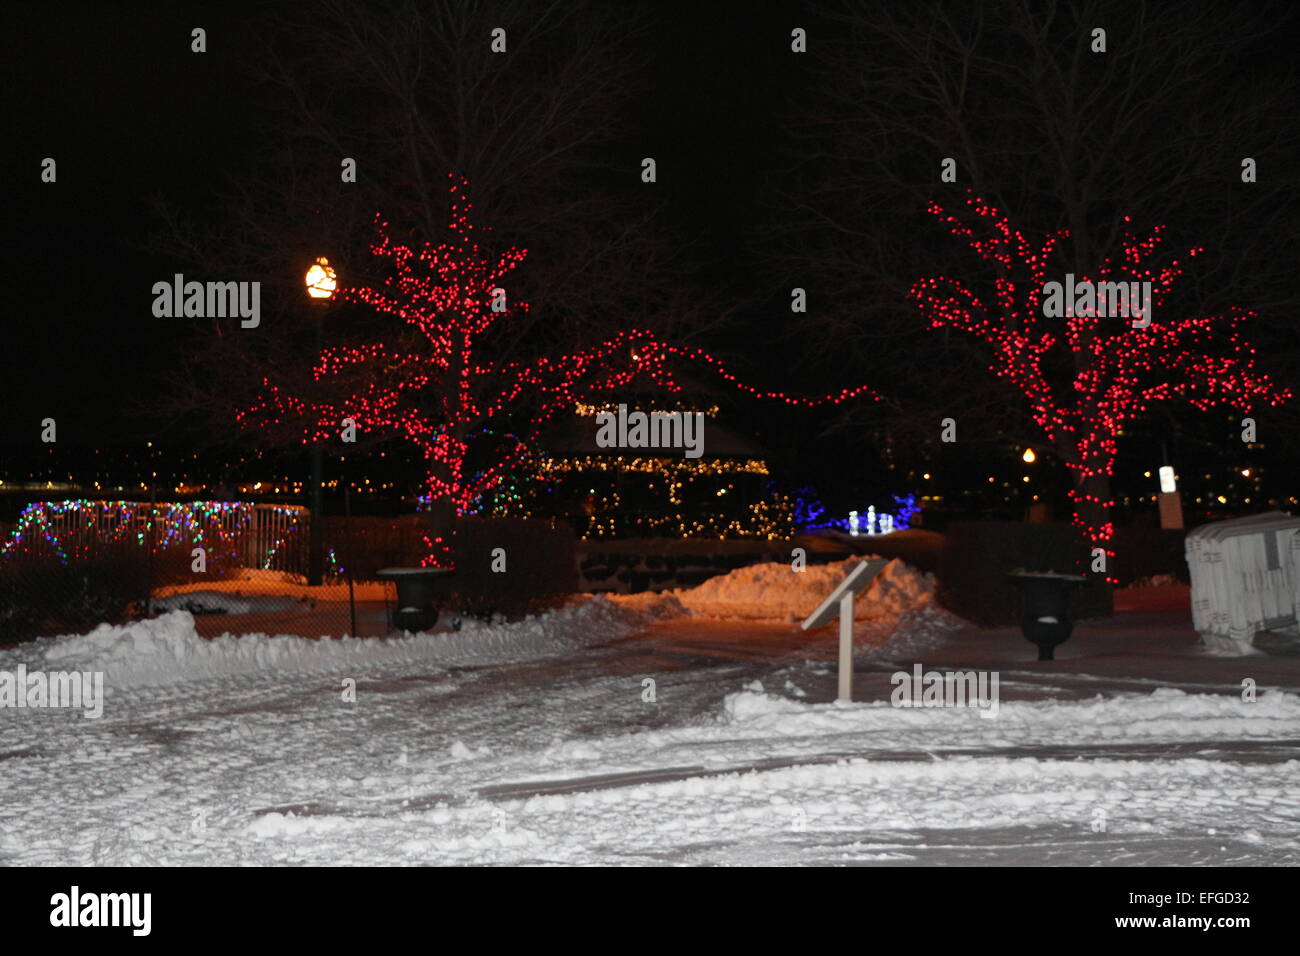 winter lights display on trees Stock Photo